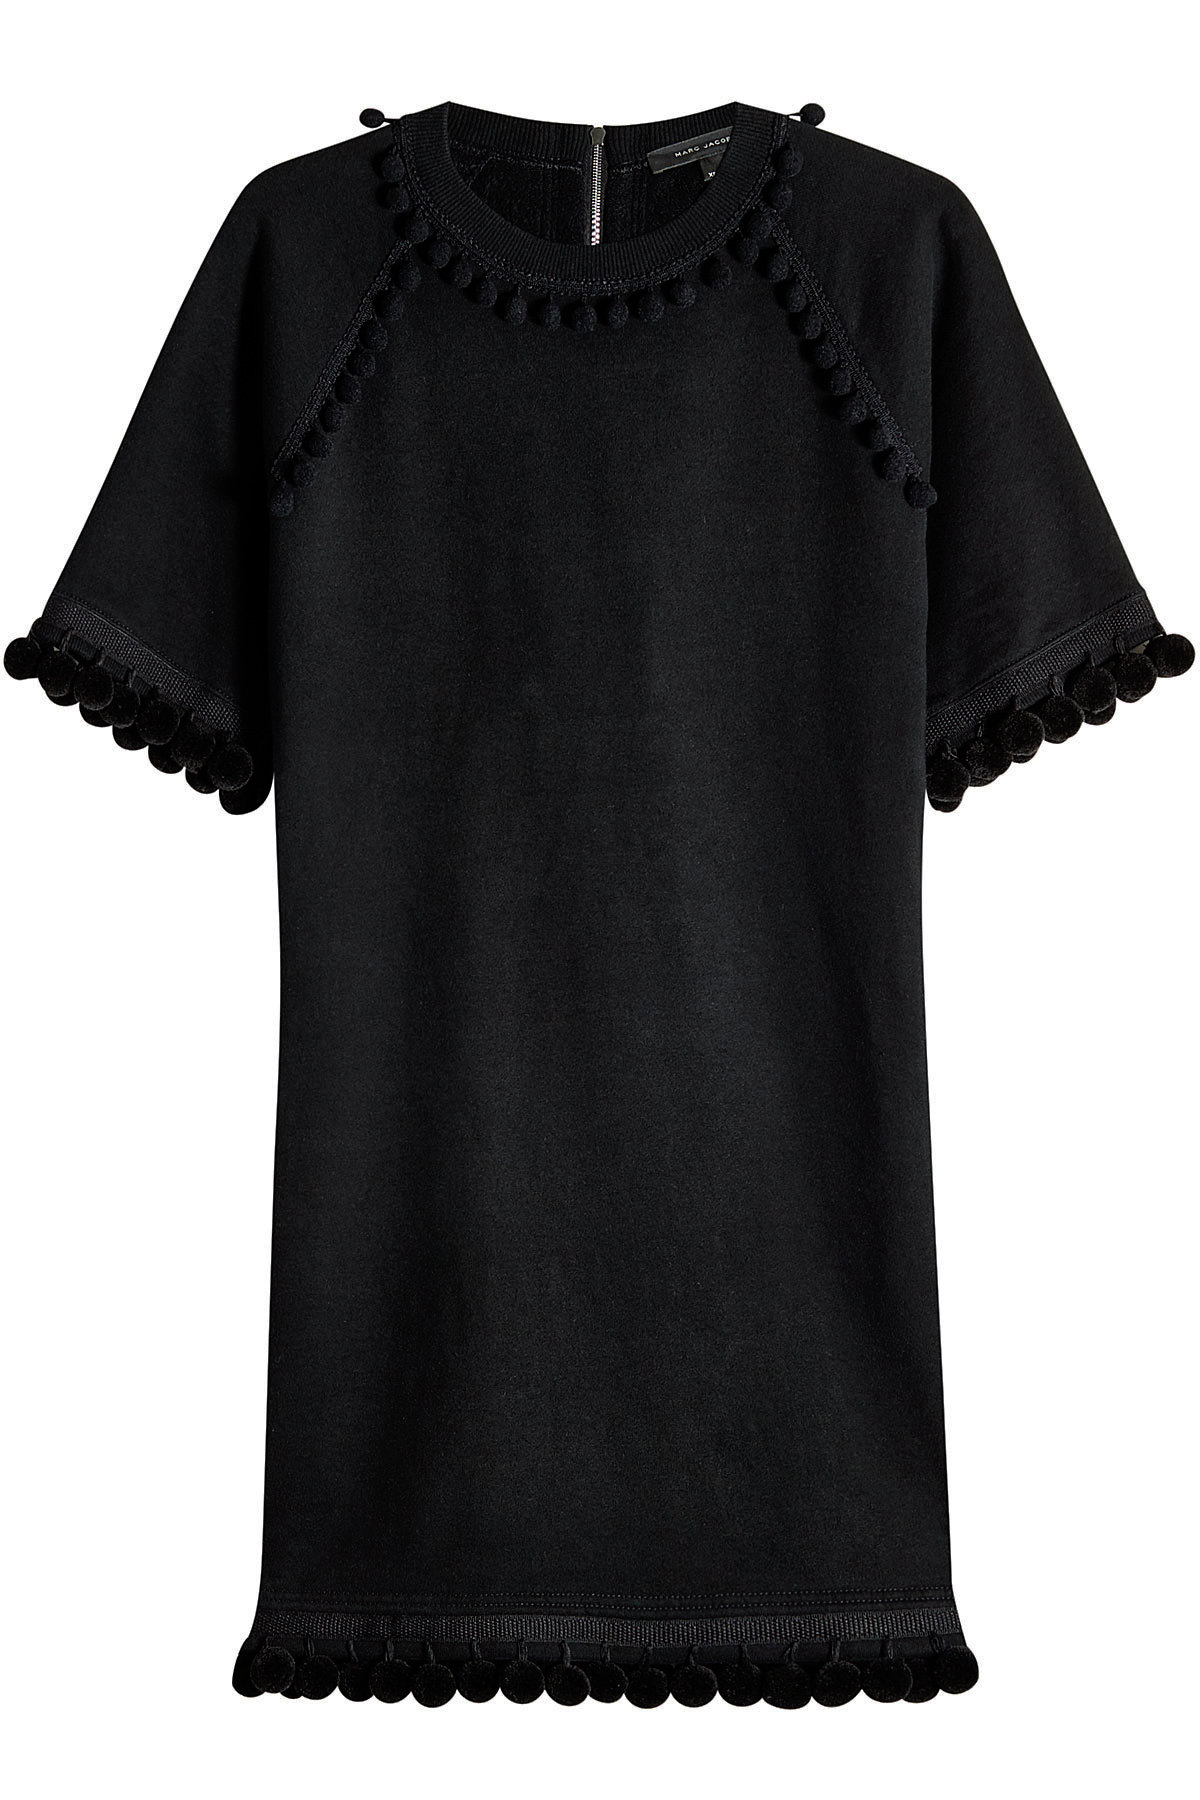 Marc Jacobs - Cotton Sweatshirt Dress with Pompoms